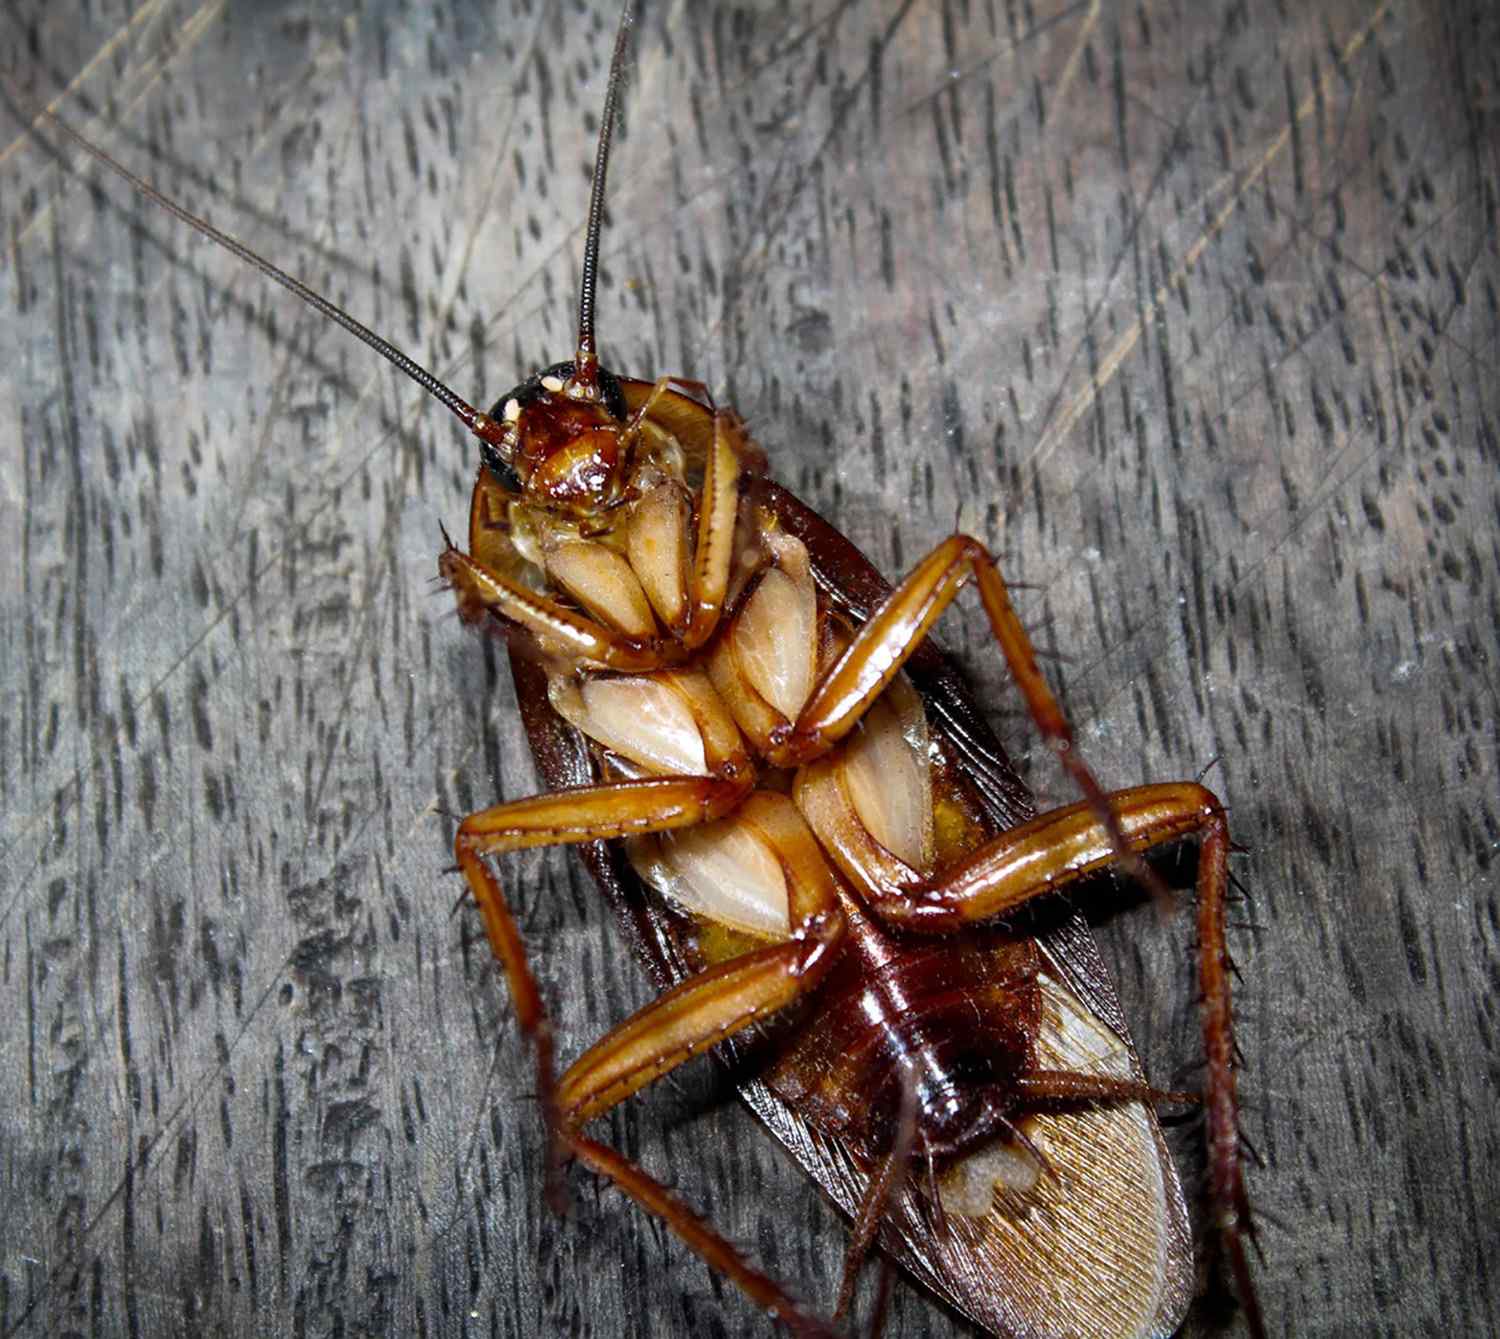 Dead Cockroaches